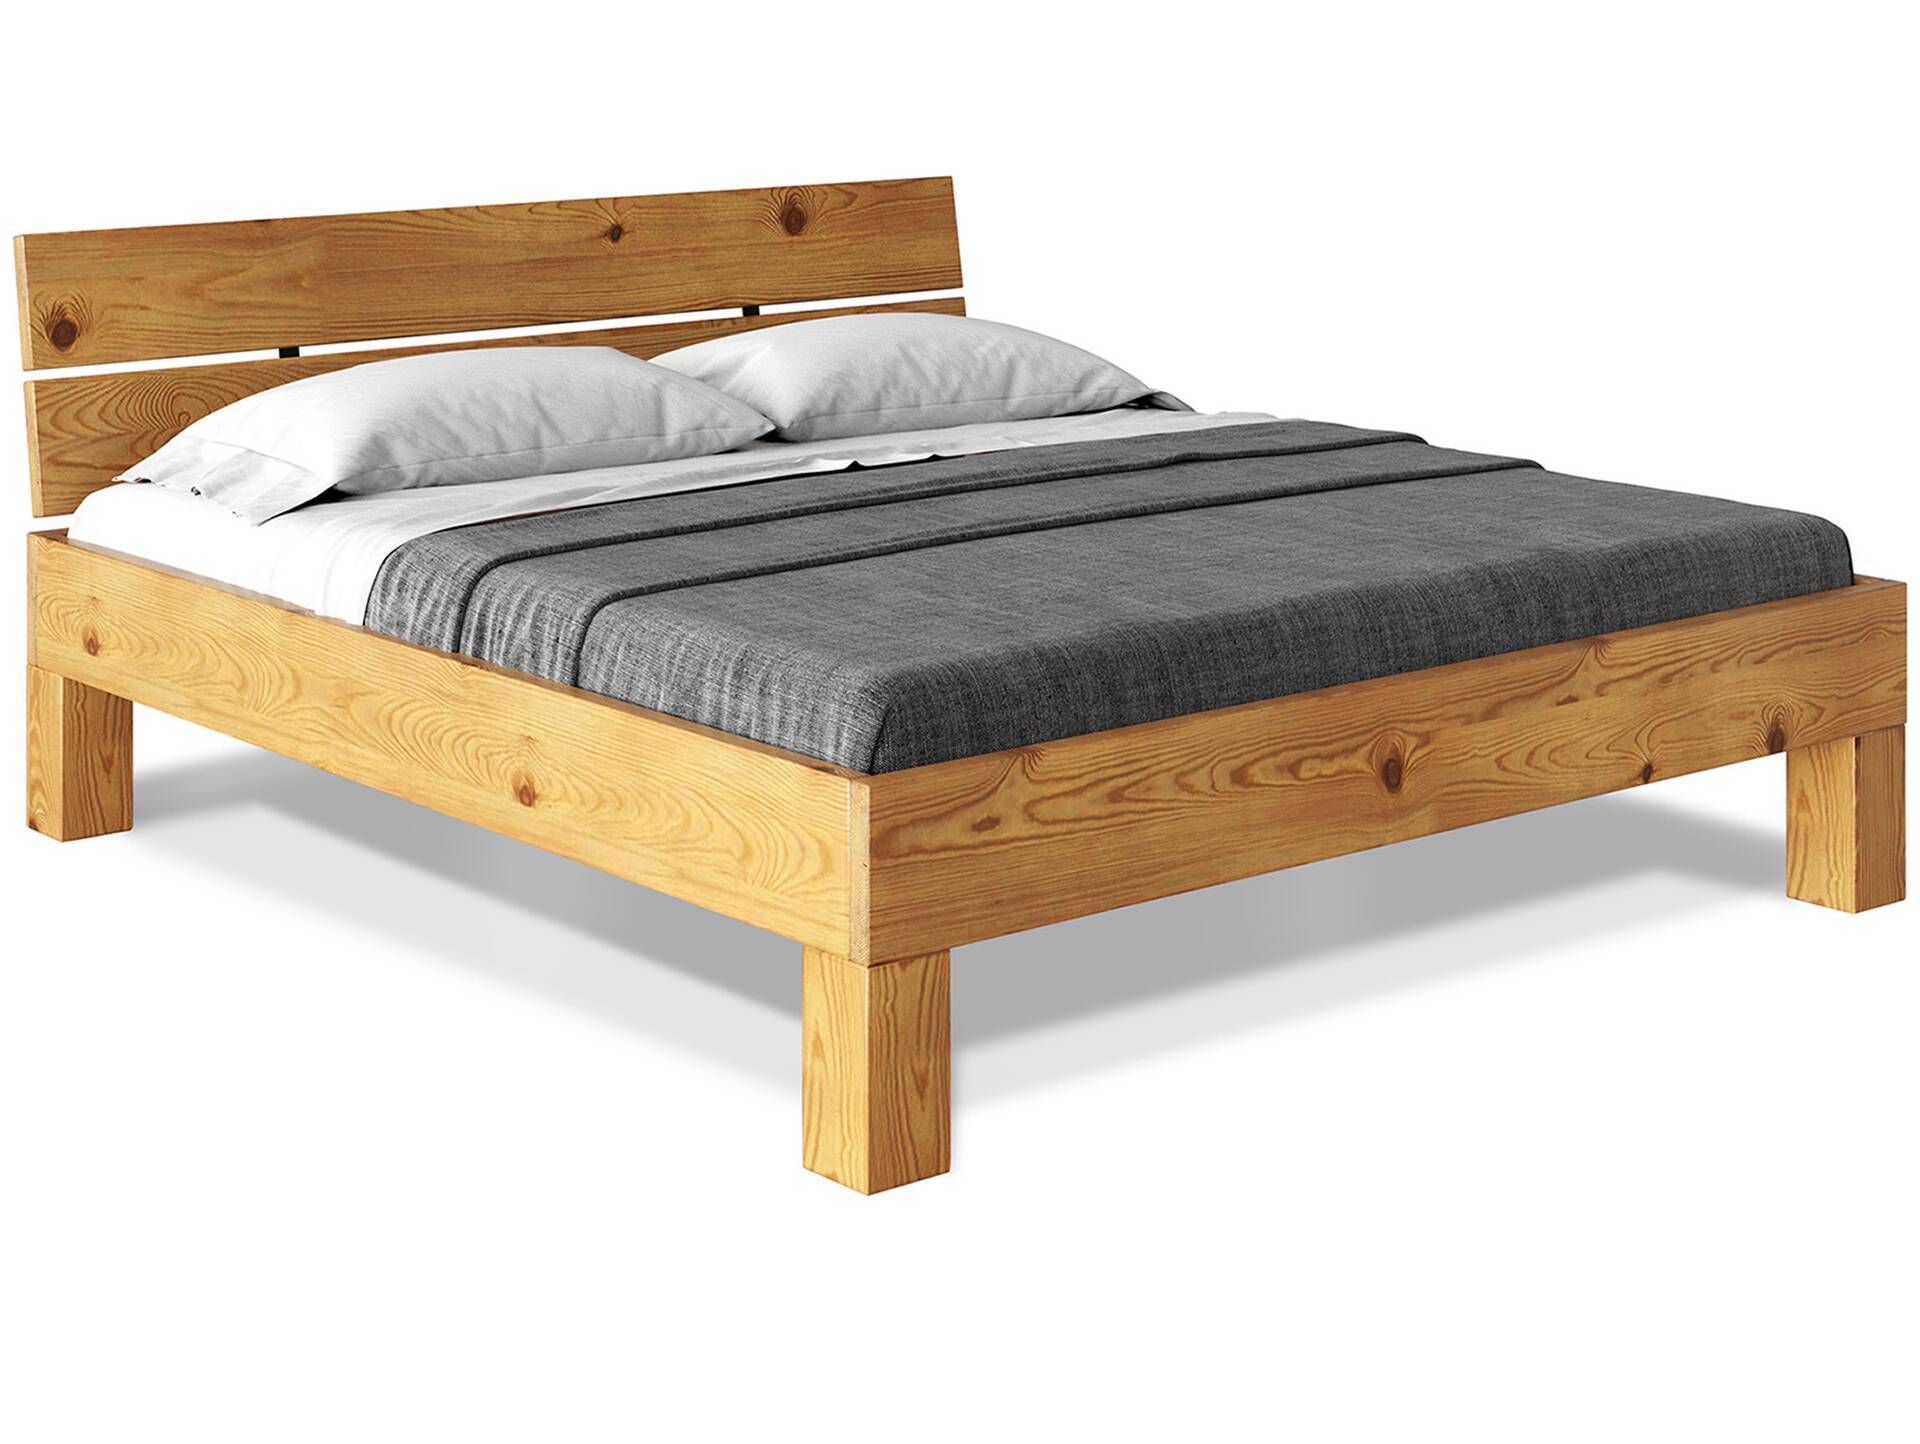 CURBY 4-Fuß-Bett mit Kopfteil, Material Massivholz, rustikale Altholzoptik, Fichte 160 x 220 cm | natur | Standardhöhe